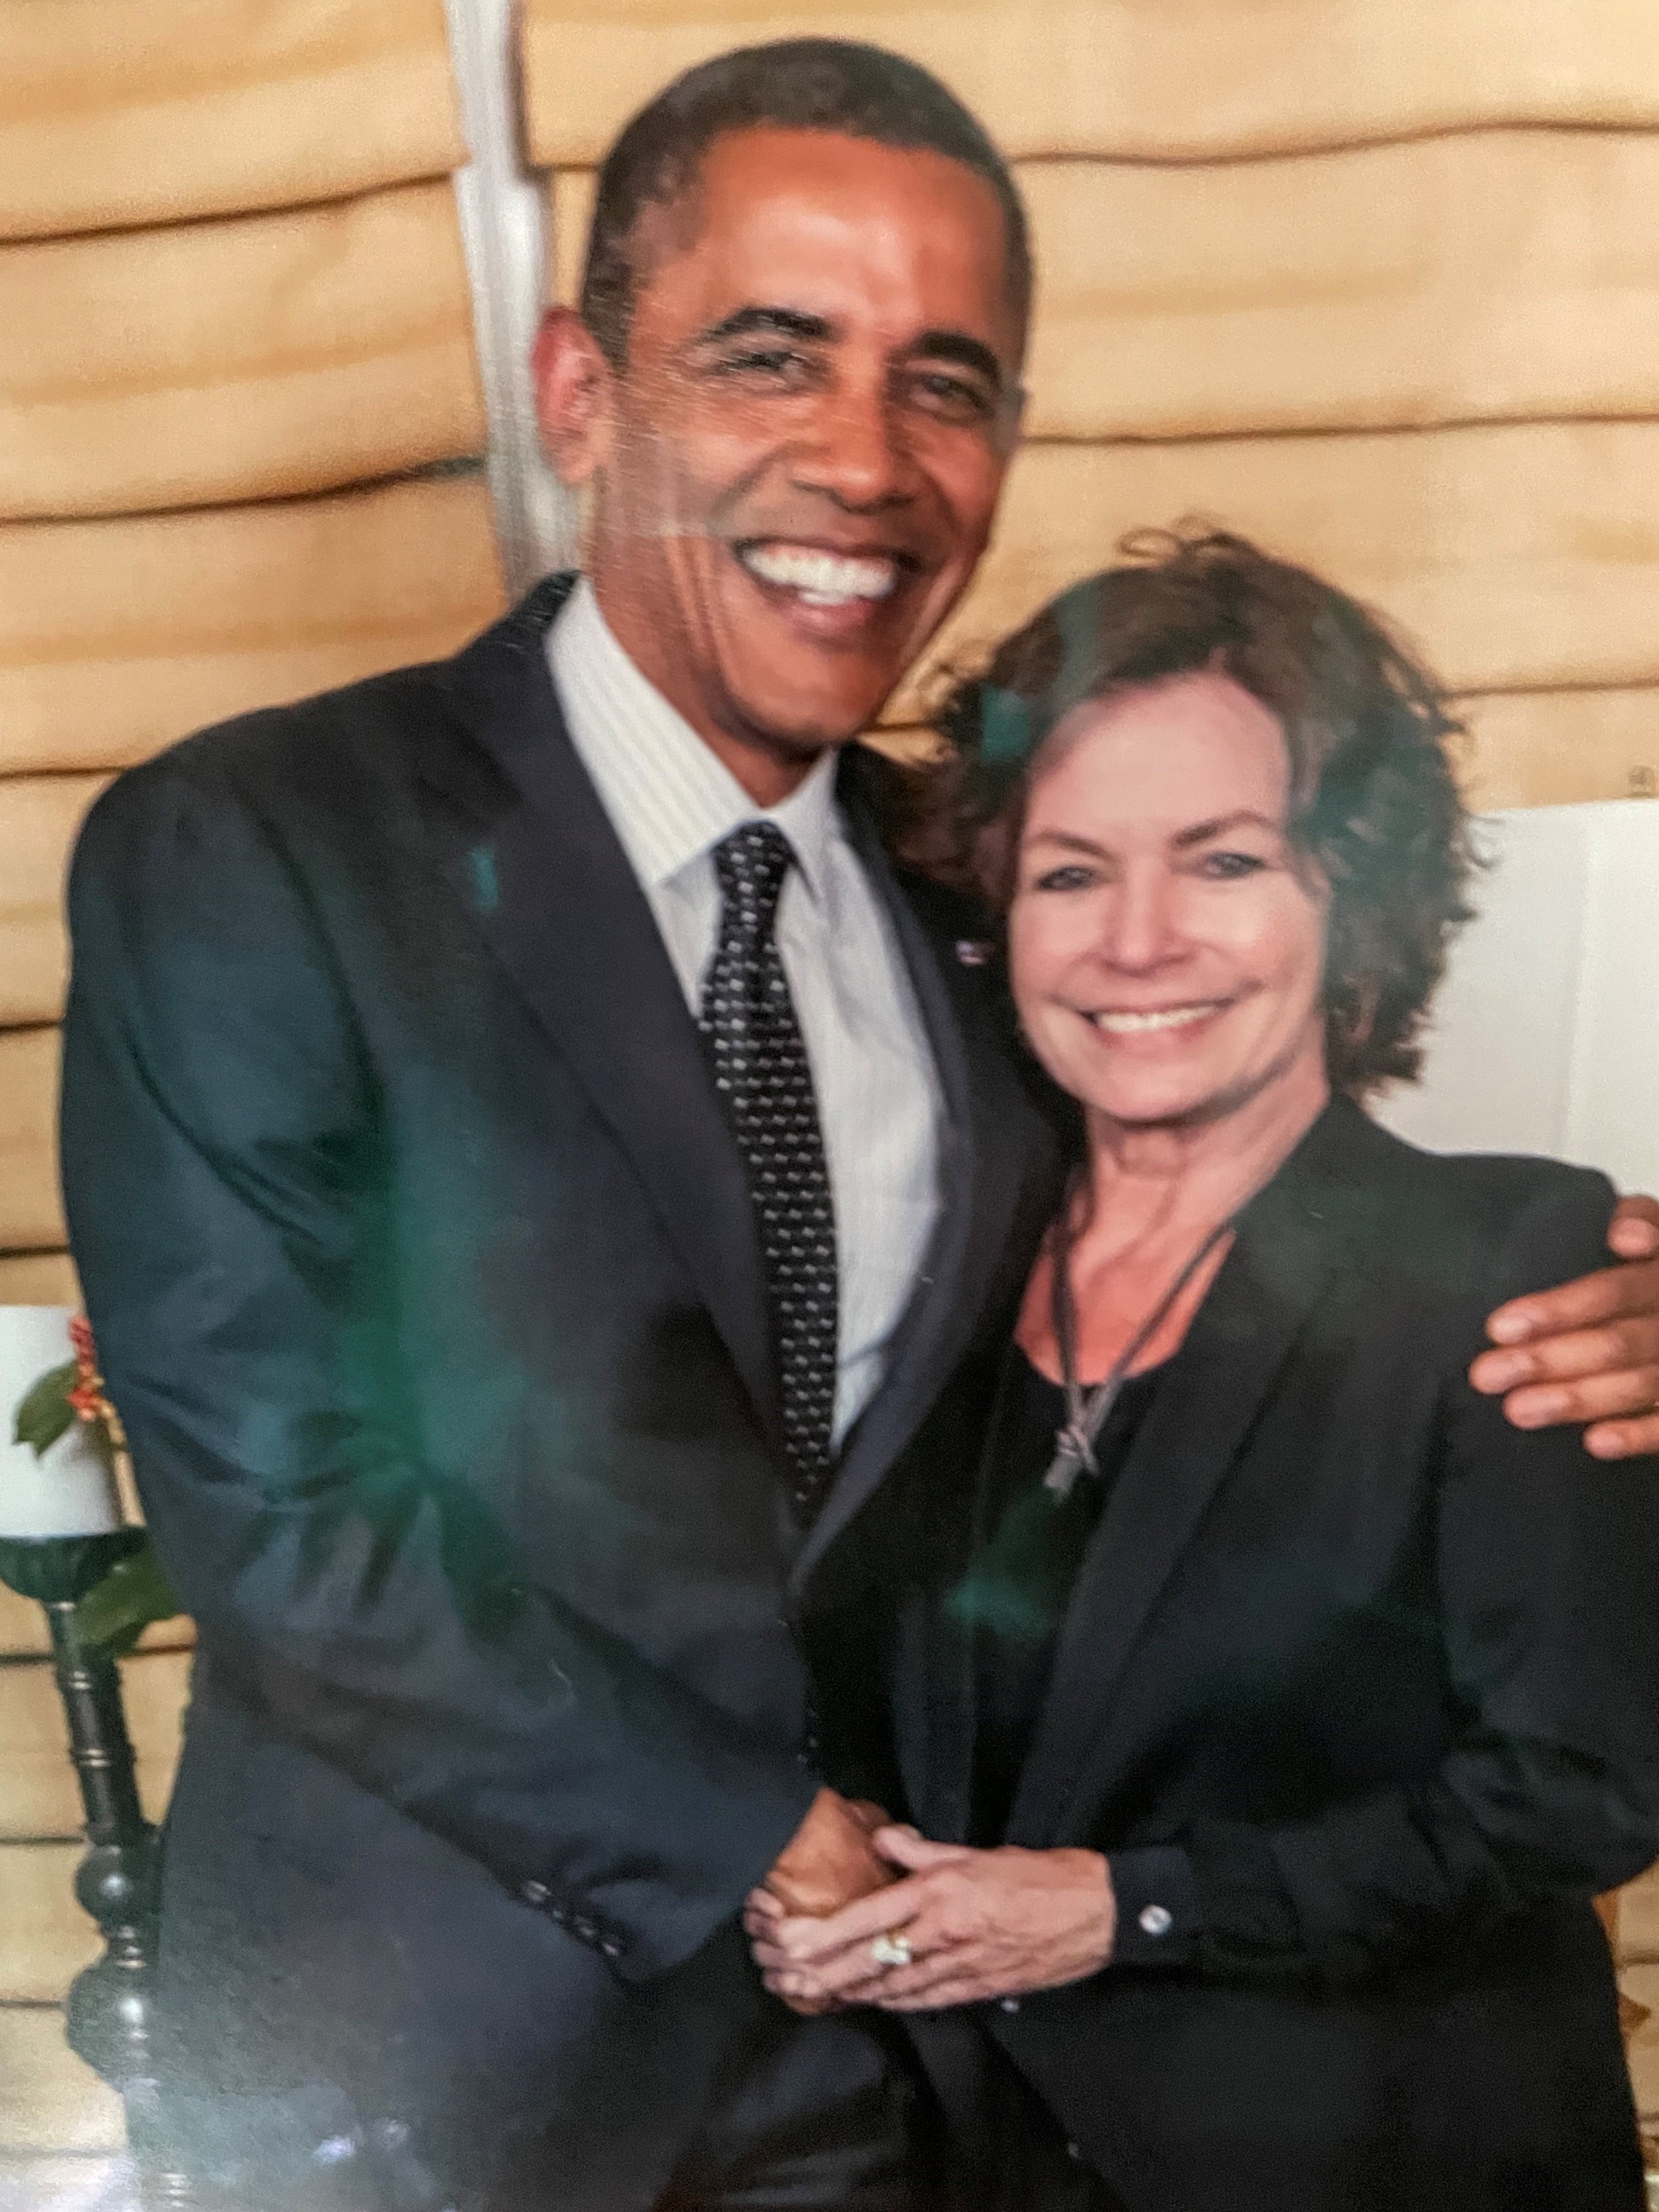 Lynn and former president Obama.